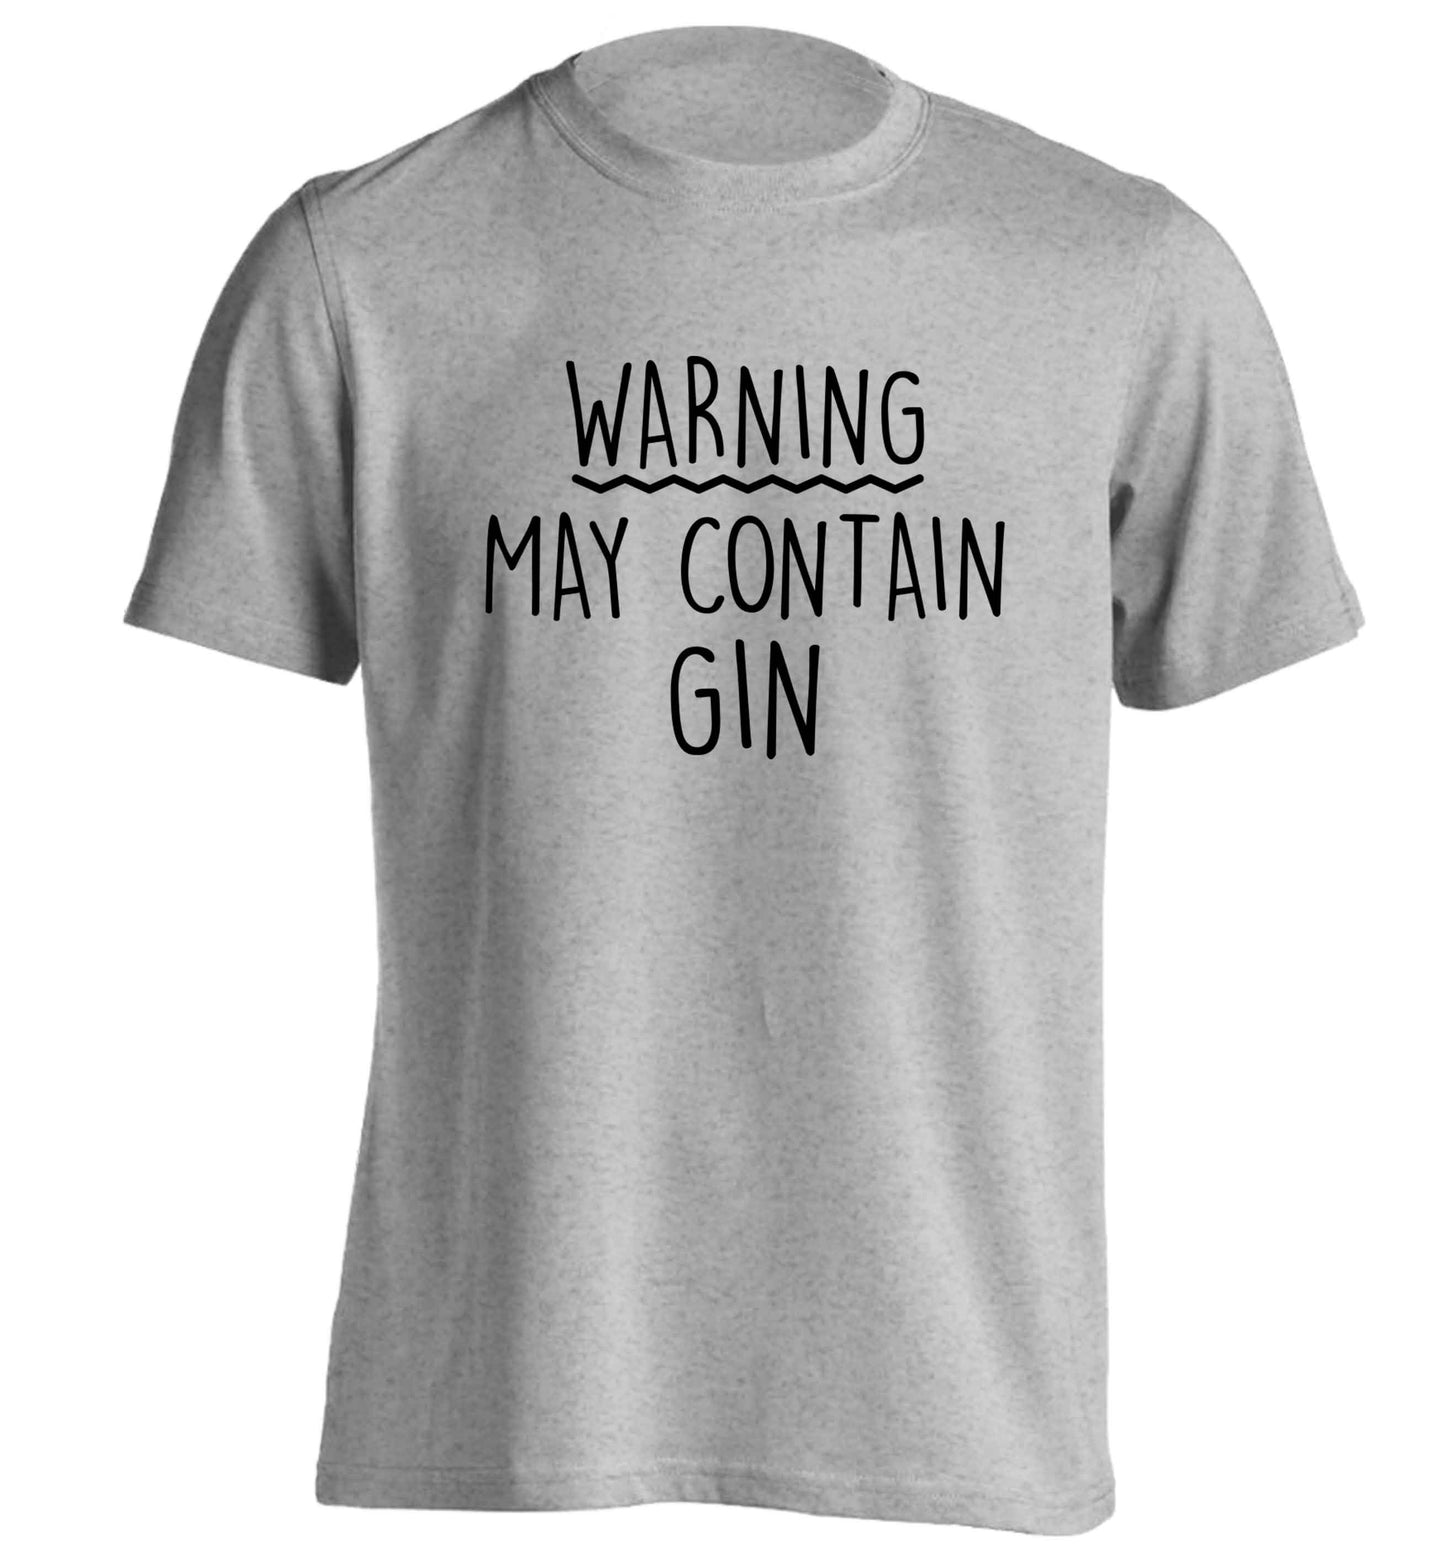 Warning may contain gin adults unisex grey Tshirt 2XL